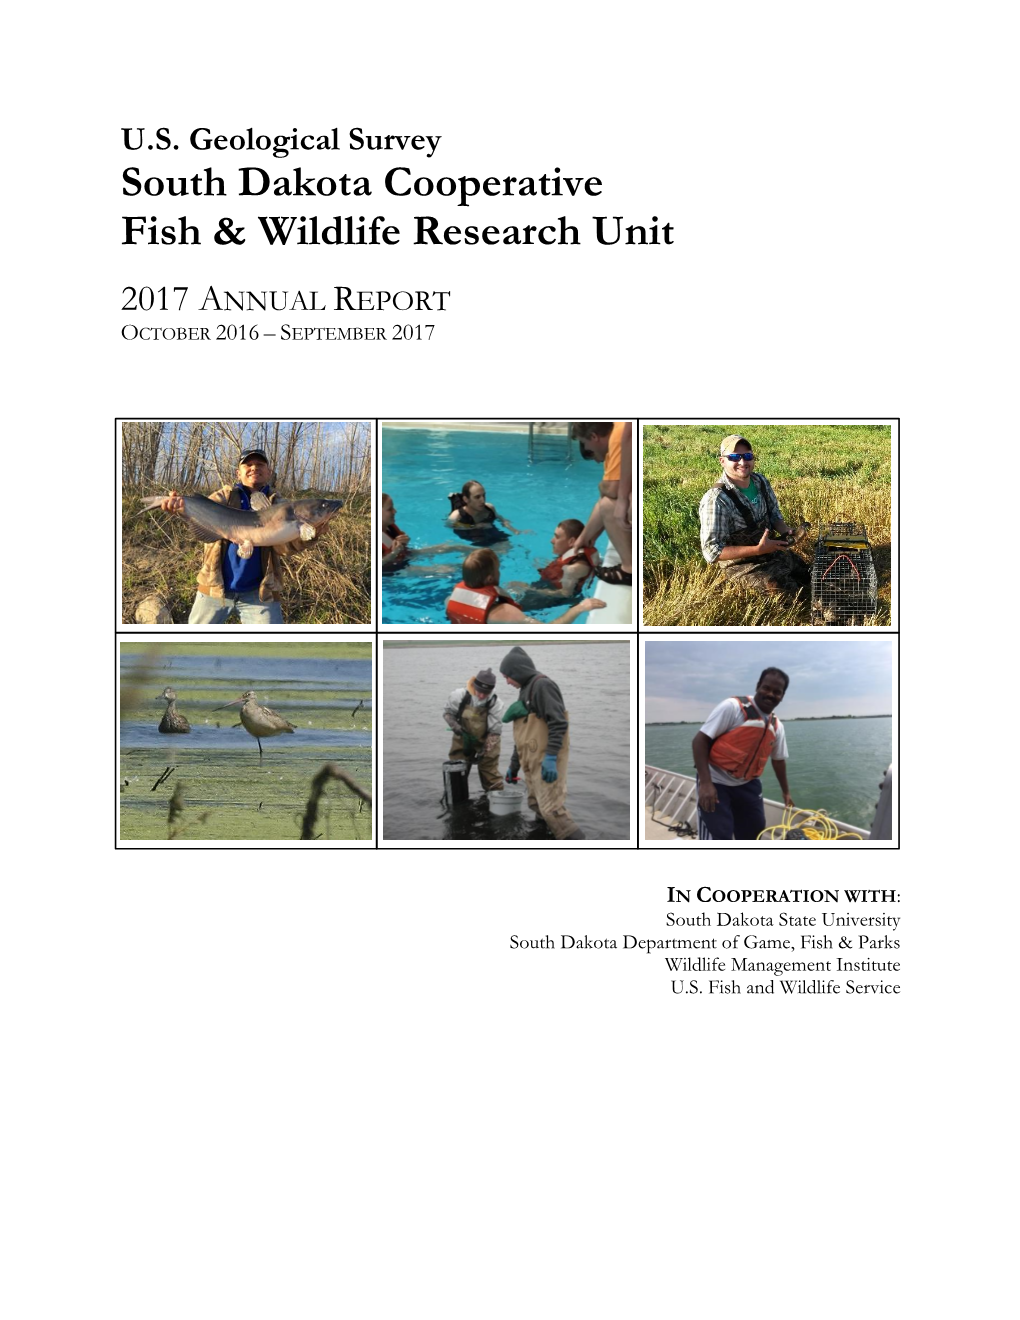 South Dakota Cooperative Fish & Wildlife Research Unit